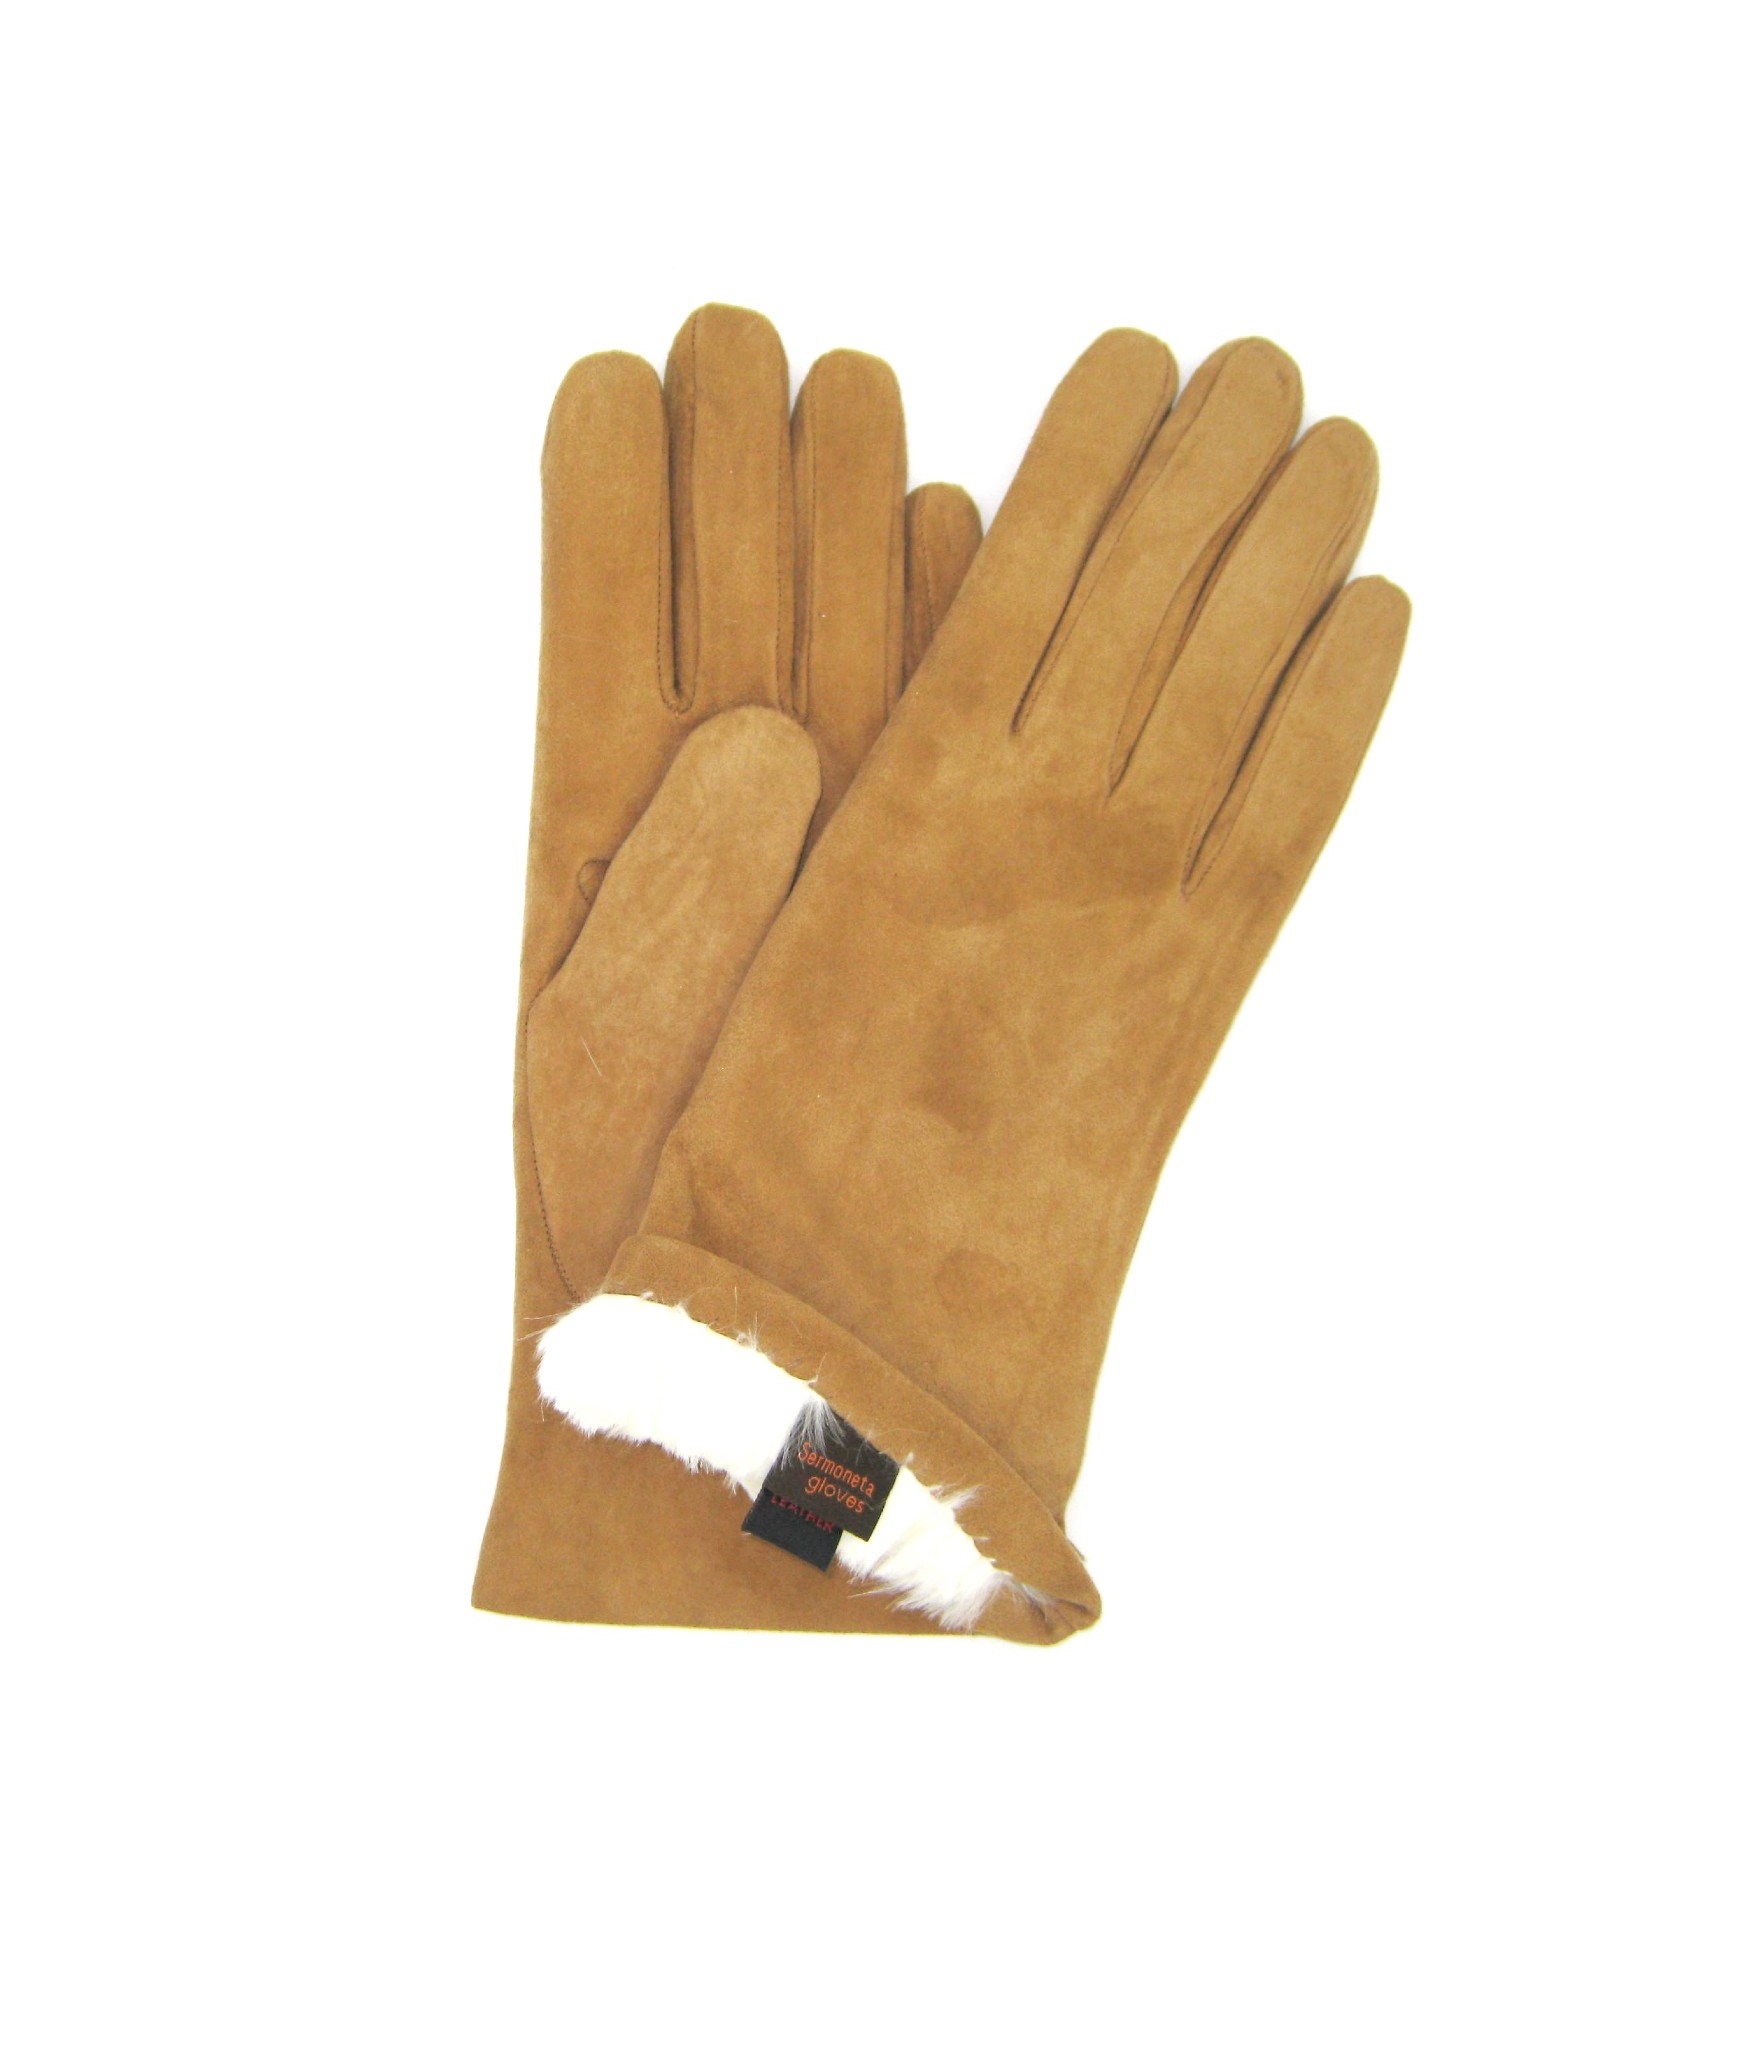 Suede Nappa leather gloves 2bt  Rabbit fur lined  Camel